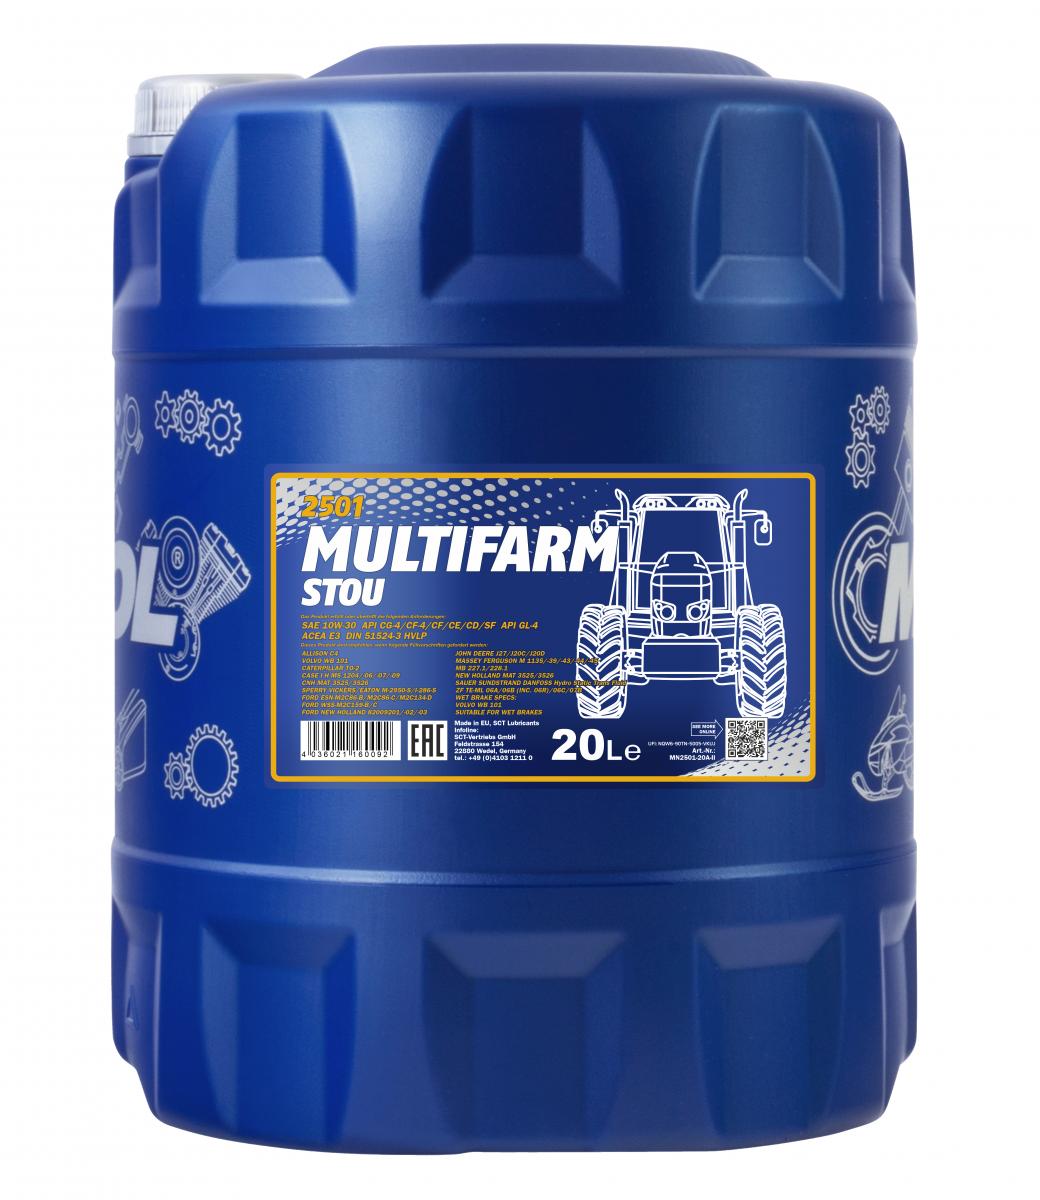 20 Liter MANNOL Multifarm STOU Motoröl SAE 10W-30 MN2501 Motor-Getriebe-Motoröl